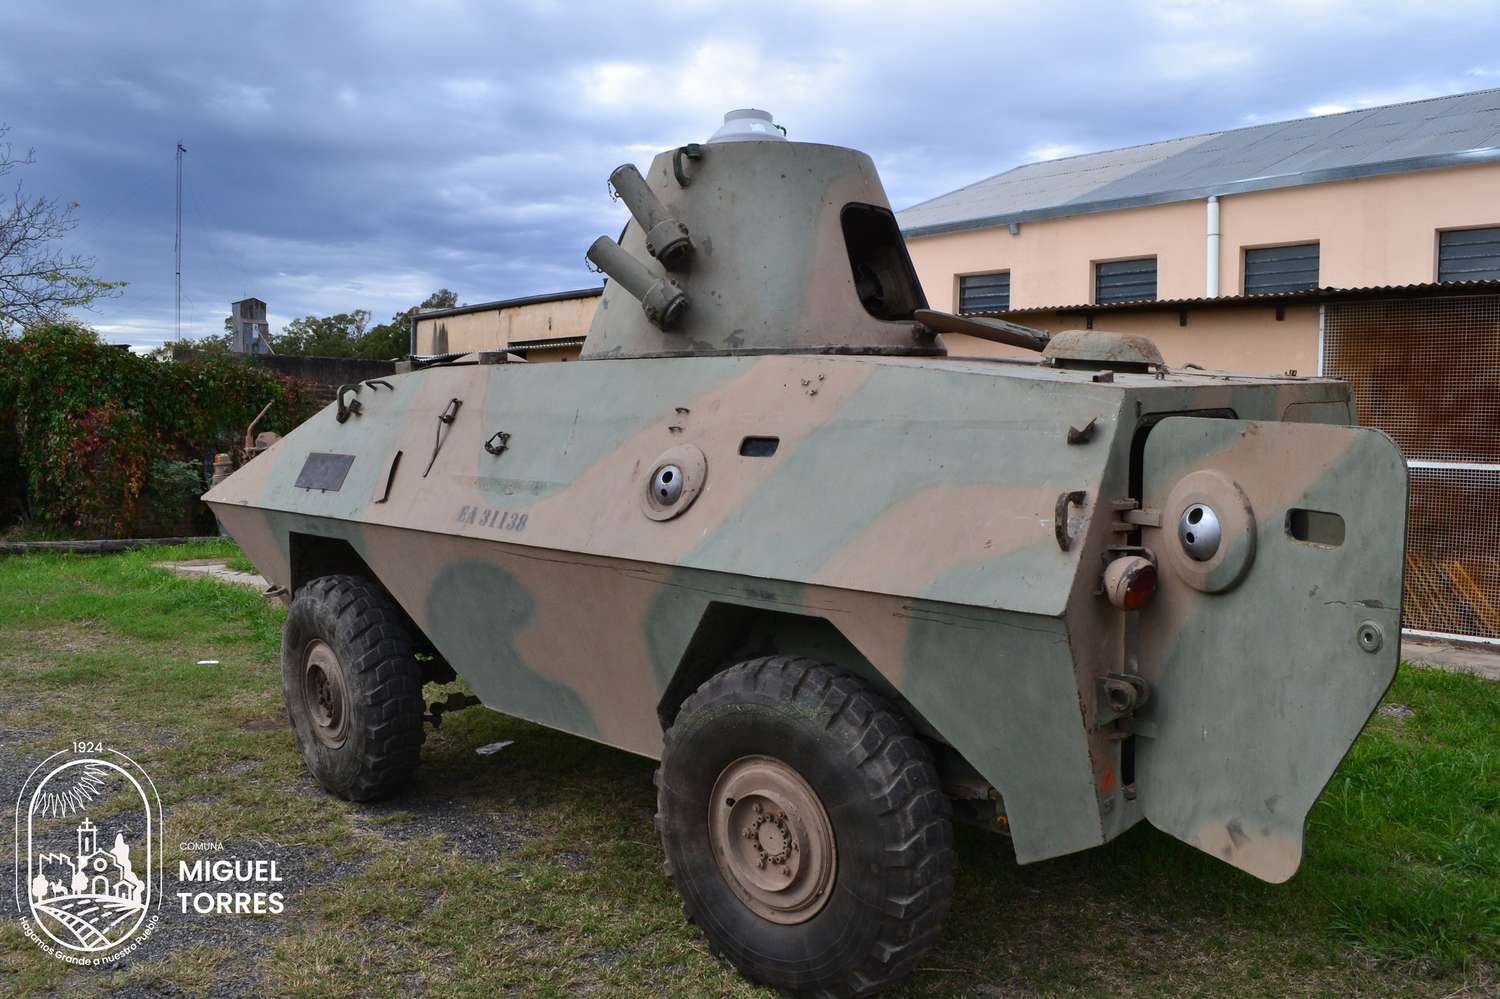 El Ejército Argentino donó una tanqueta a Miguel Torres